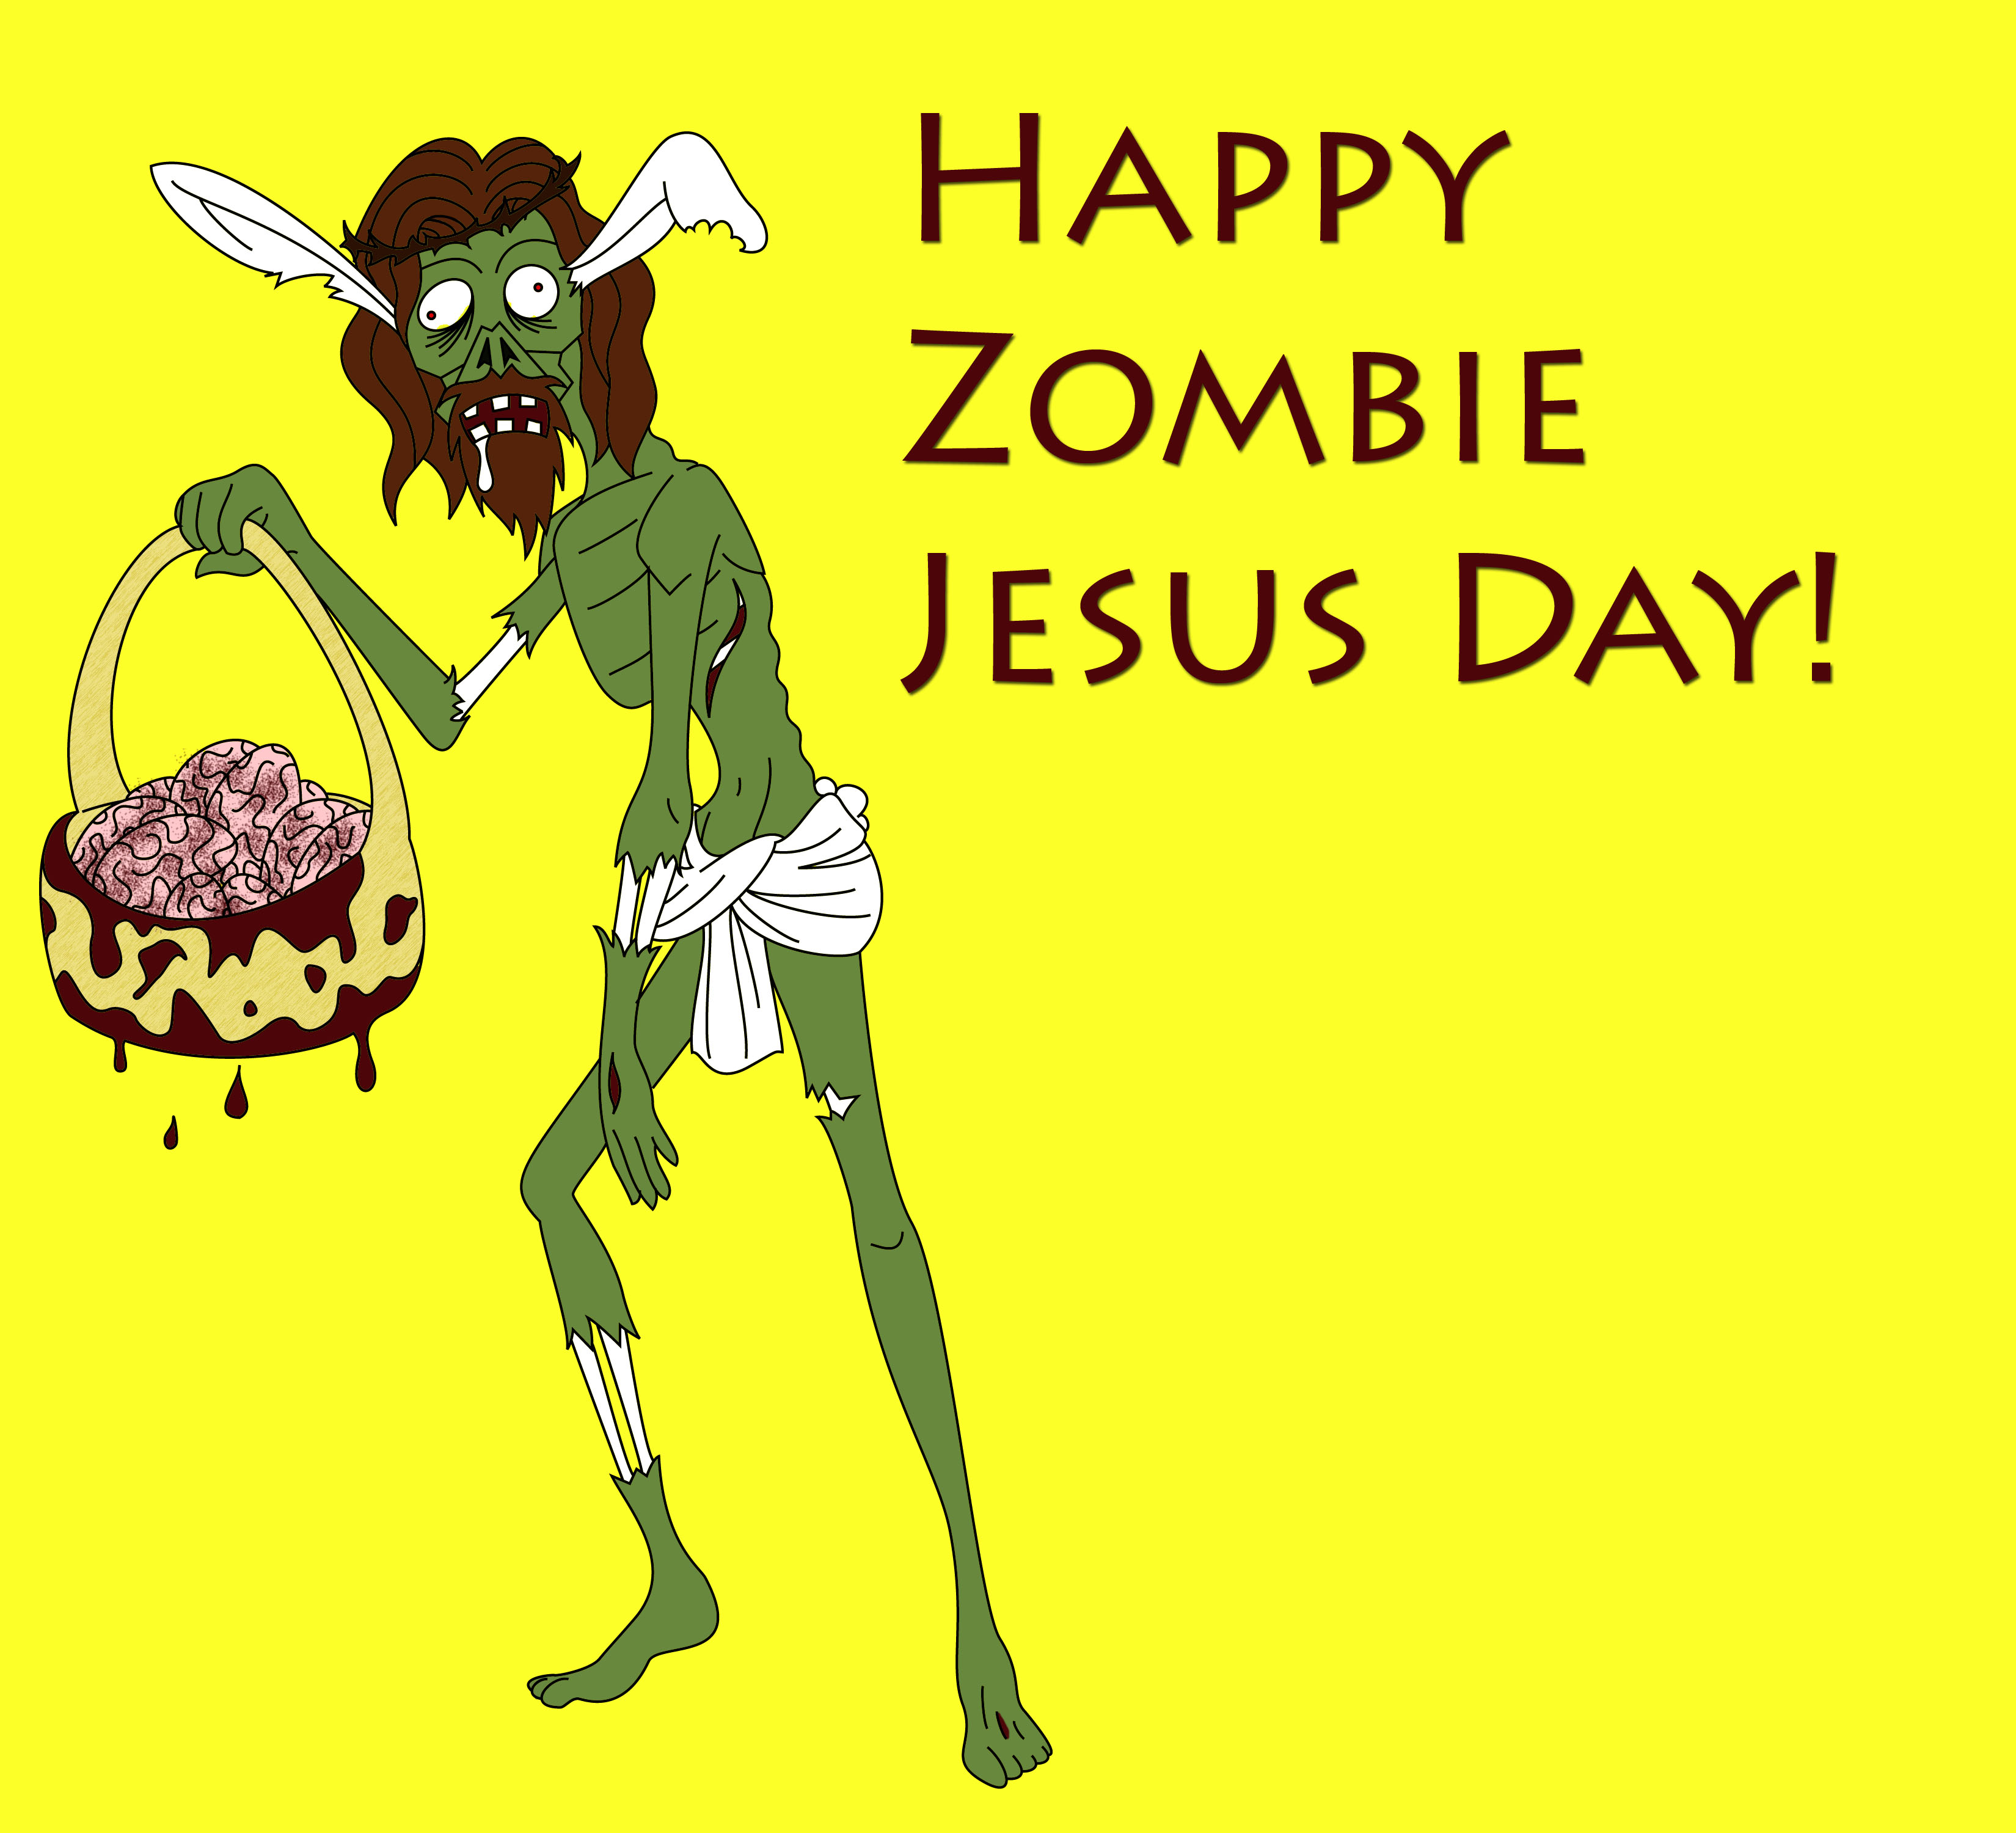 Happy_Zombie_Jesus_Day_by_Thunder_Tomoko.jpg